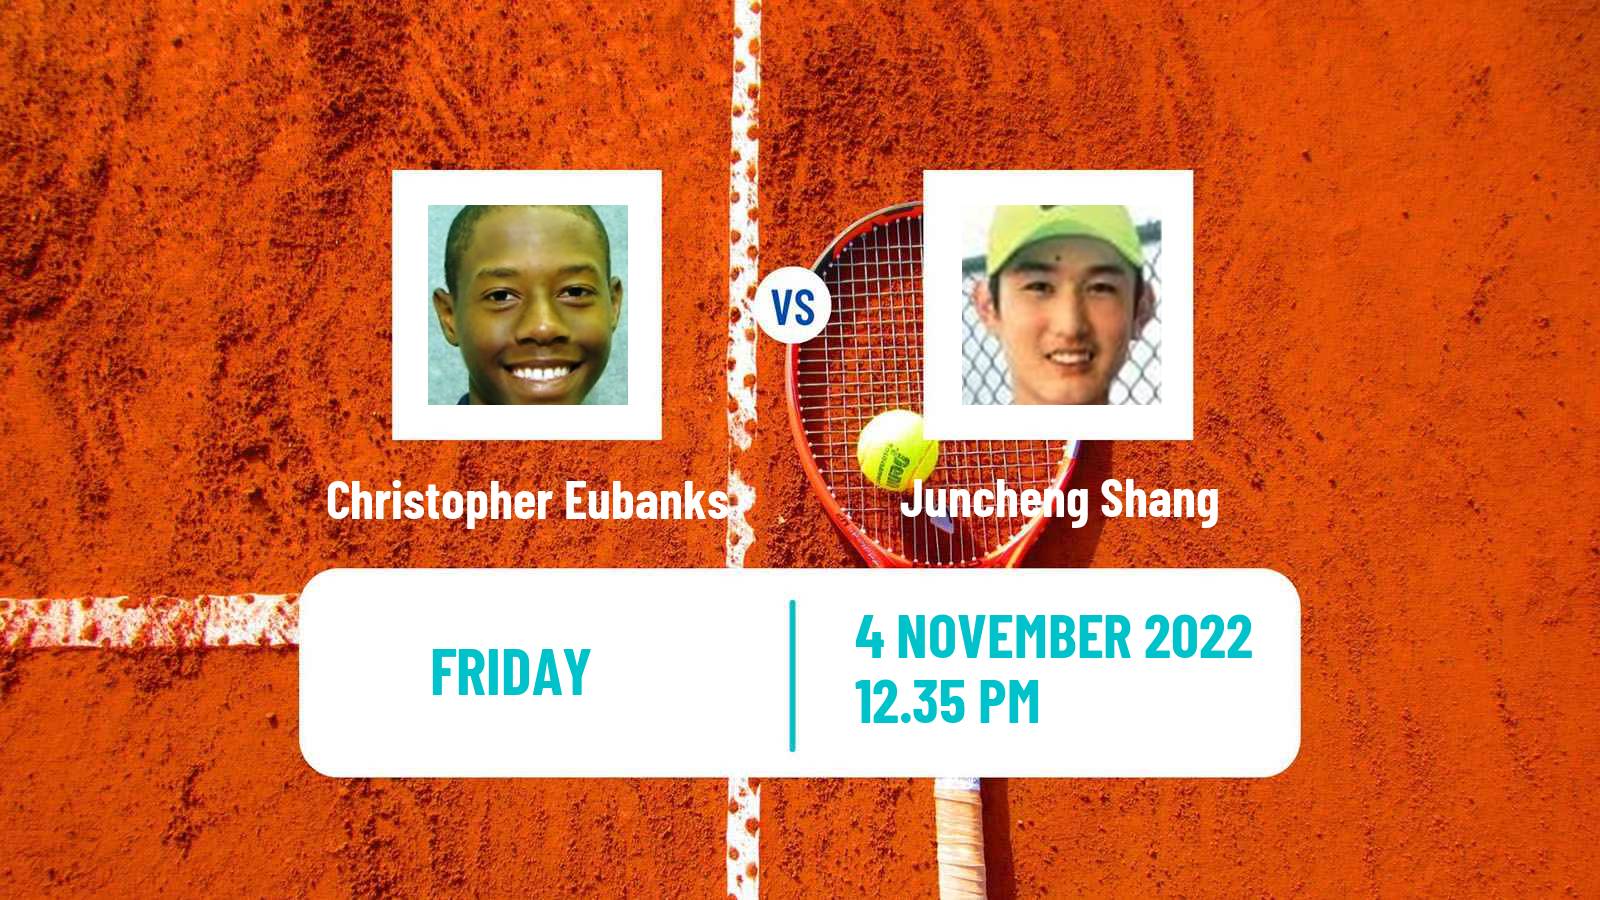 Tennis ATP Challenger Christopher Eubanks - Juncheng Shang